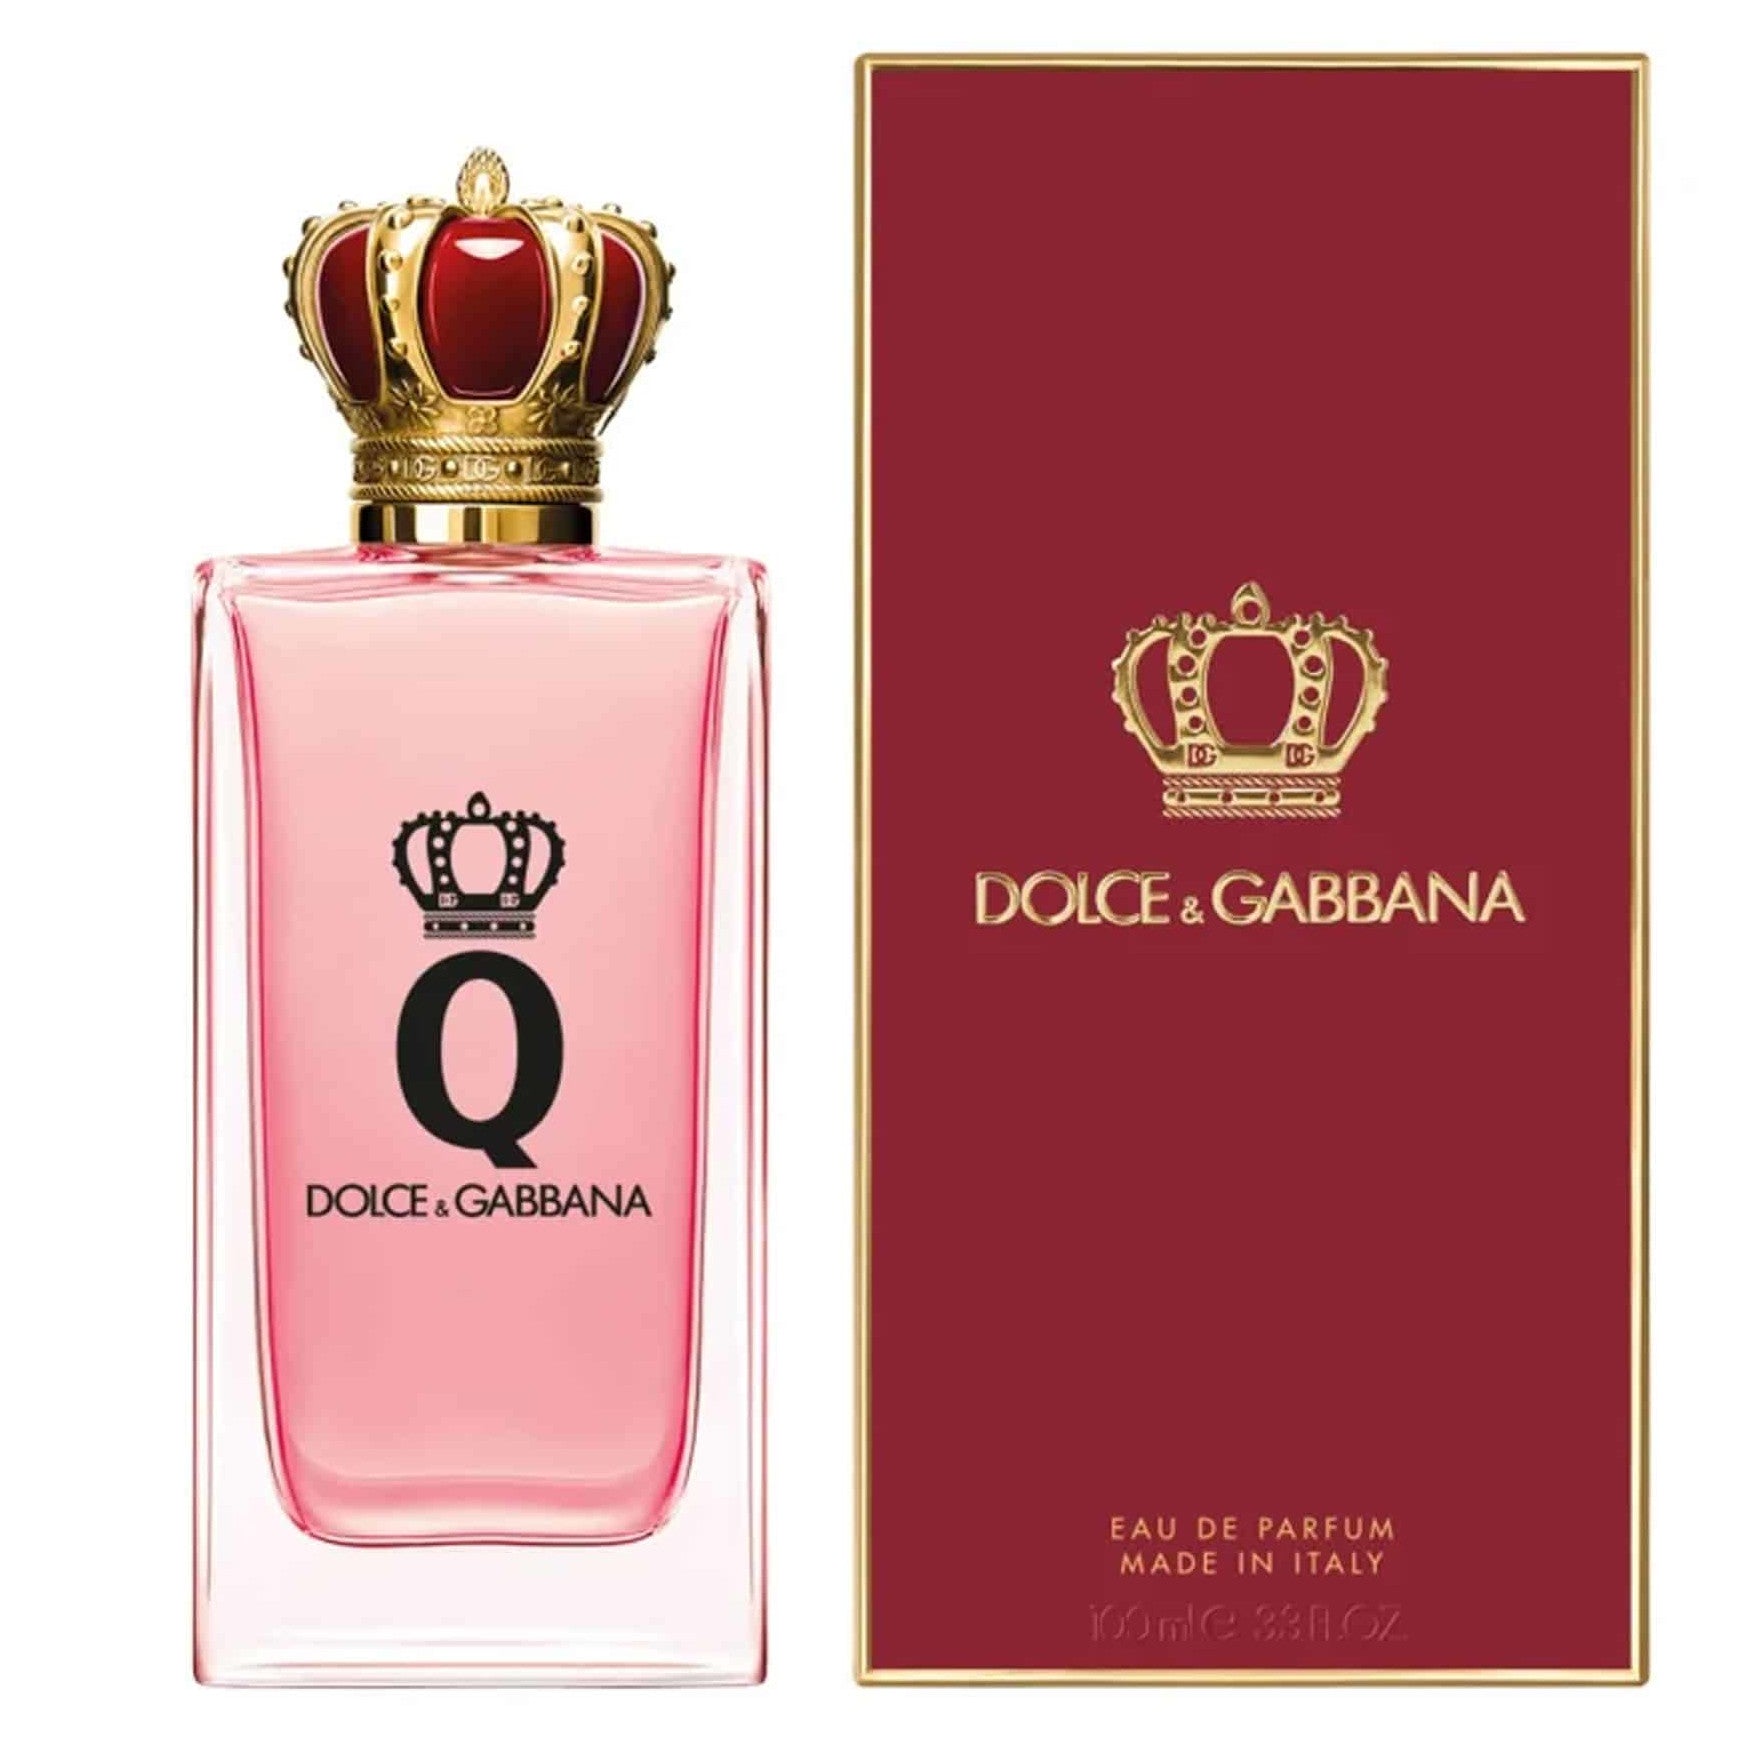 Ralph Lauren Polo Blue Perfume For Men Parfum 125ml – samawa perfumes